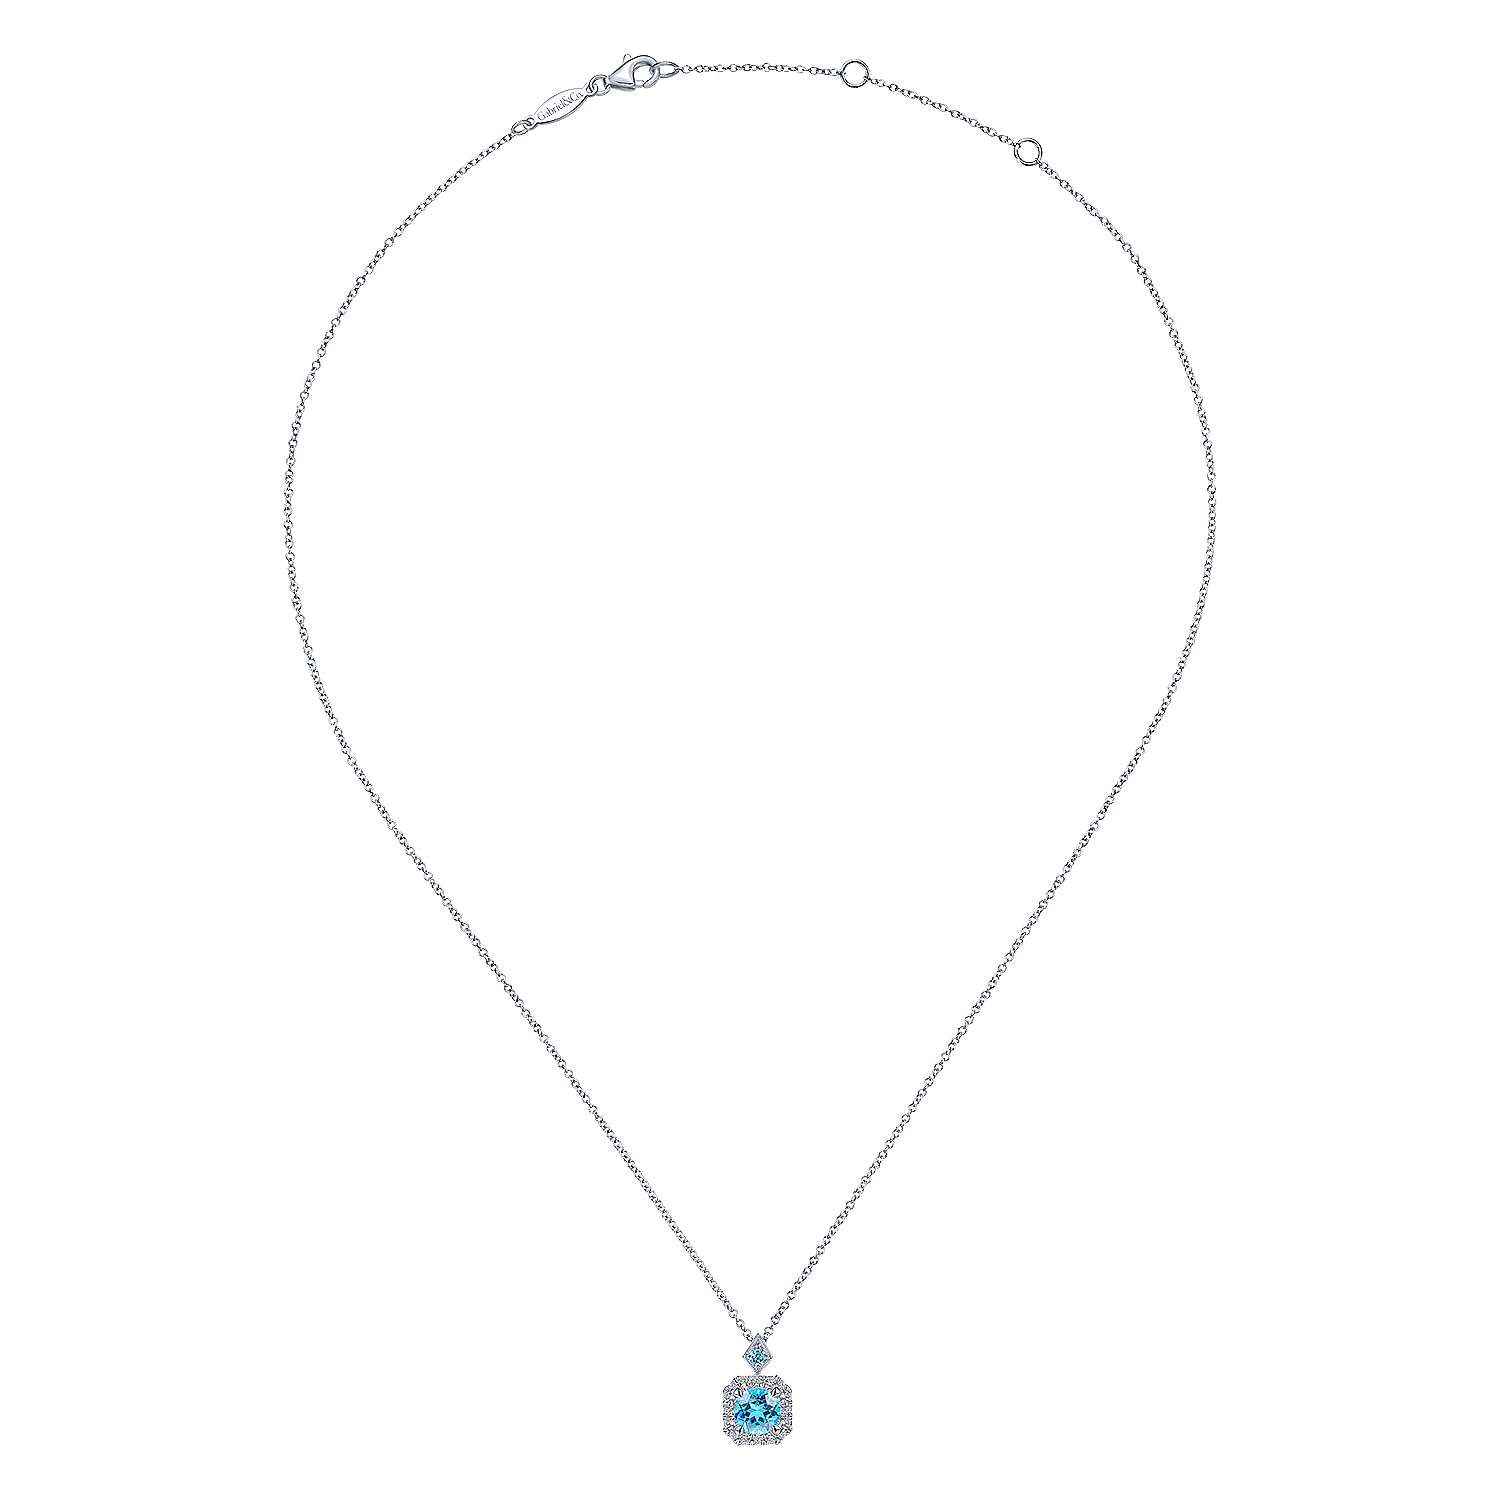 14k White Gold Round Swiss Blue Topaz Diamond Halo Pendant Necklace